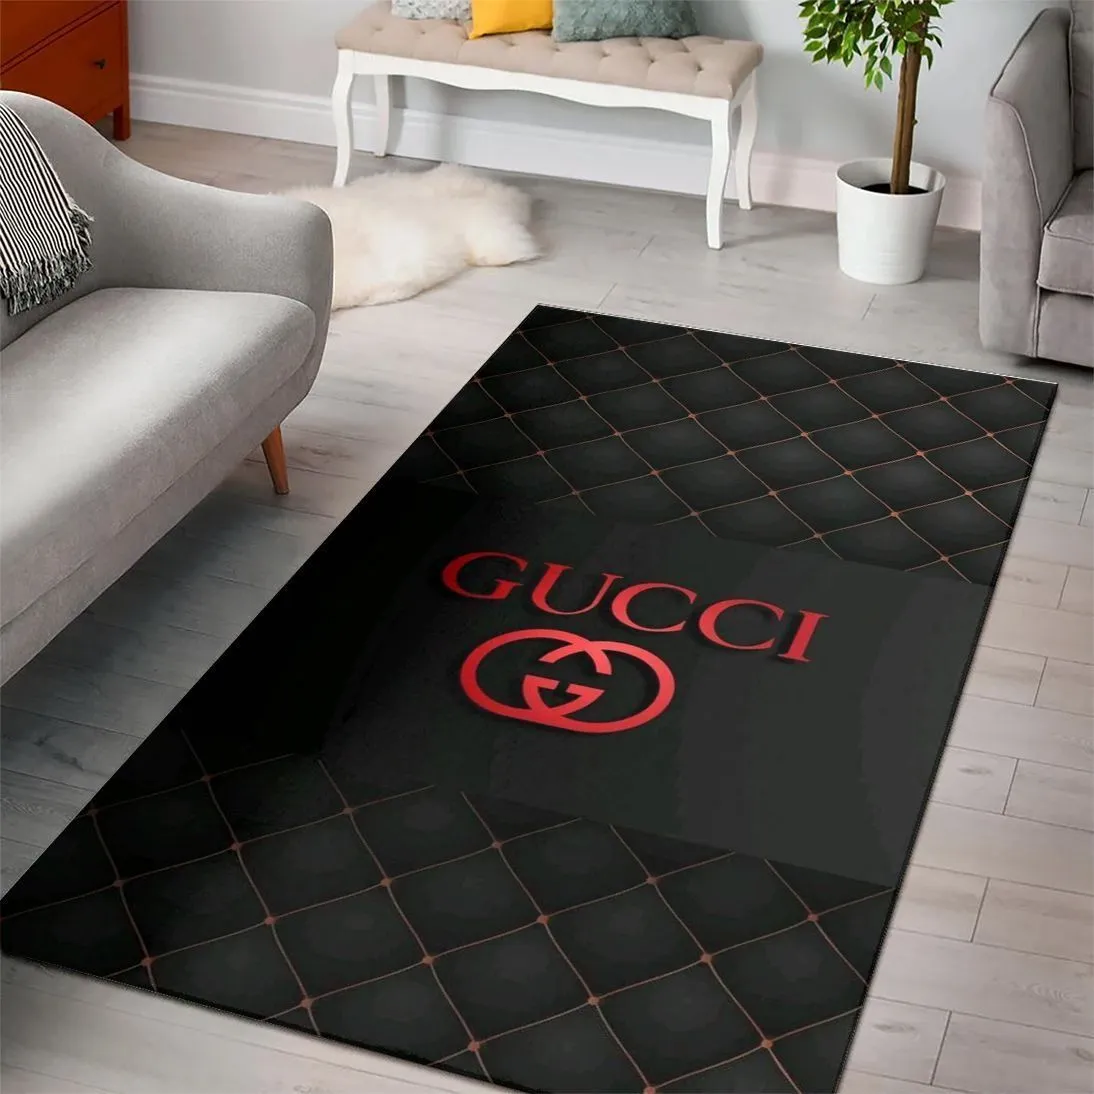 Gucci Black Rectangle Rug Fashion Brand Area Carpet Luxury Home Decor Door Mat